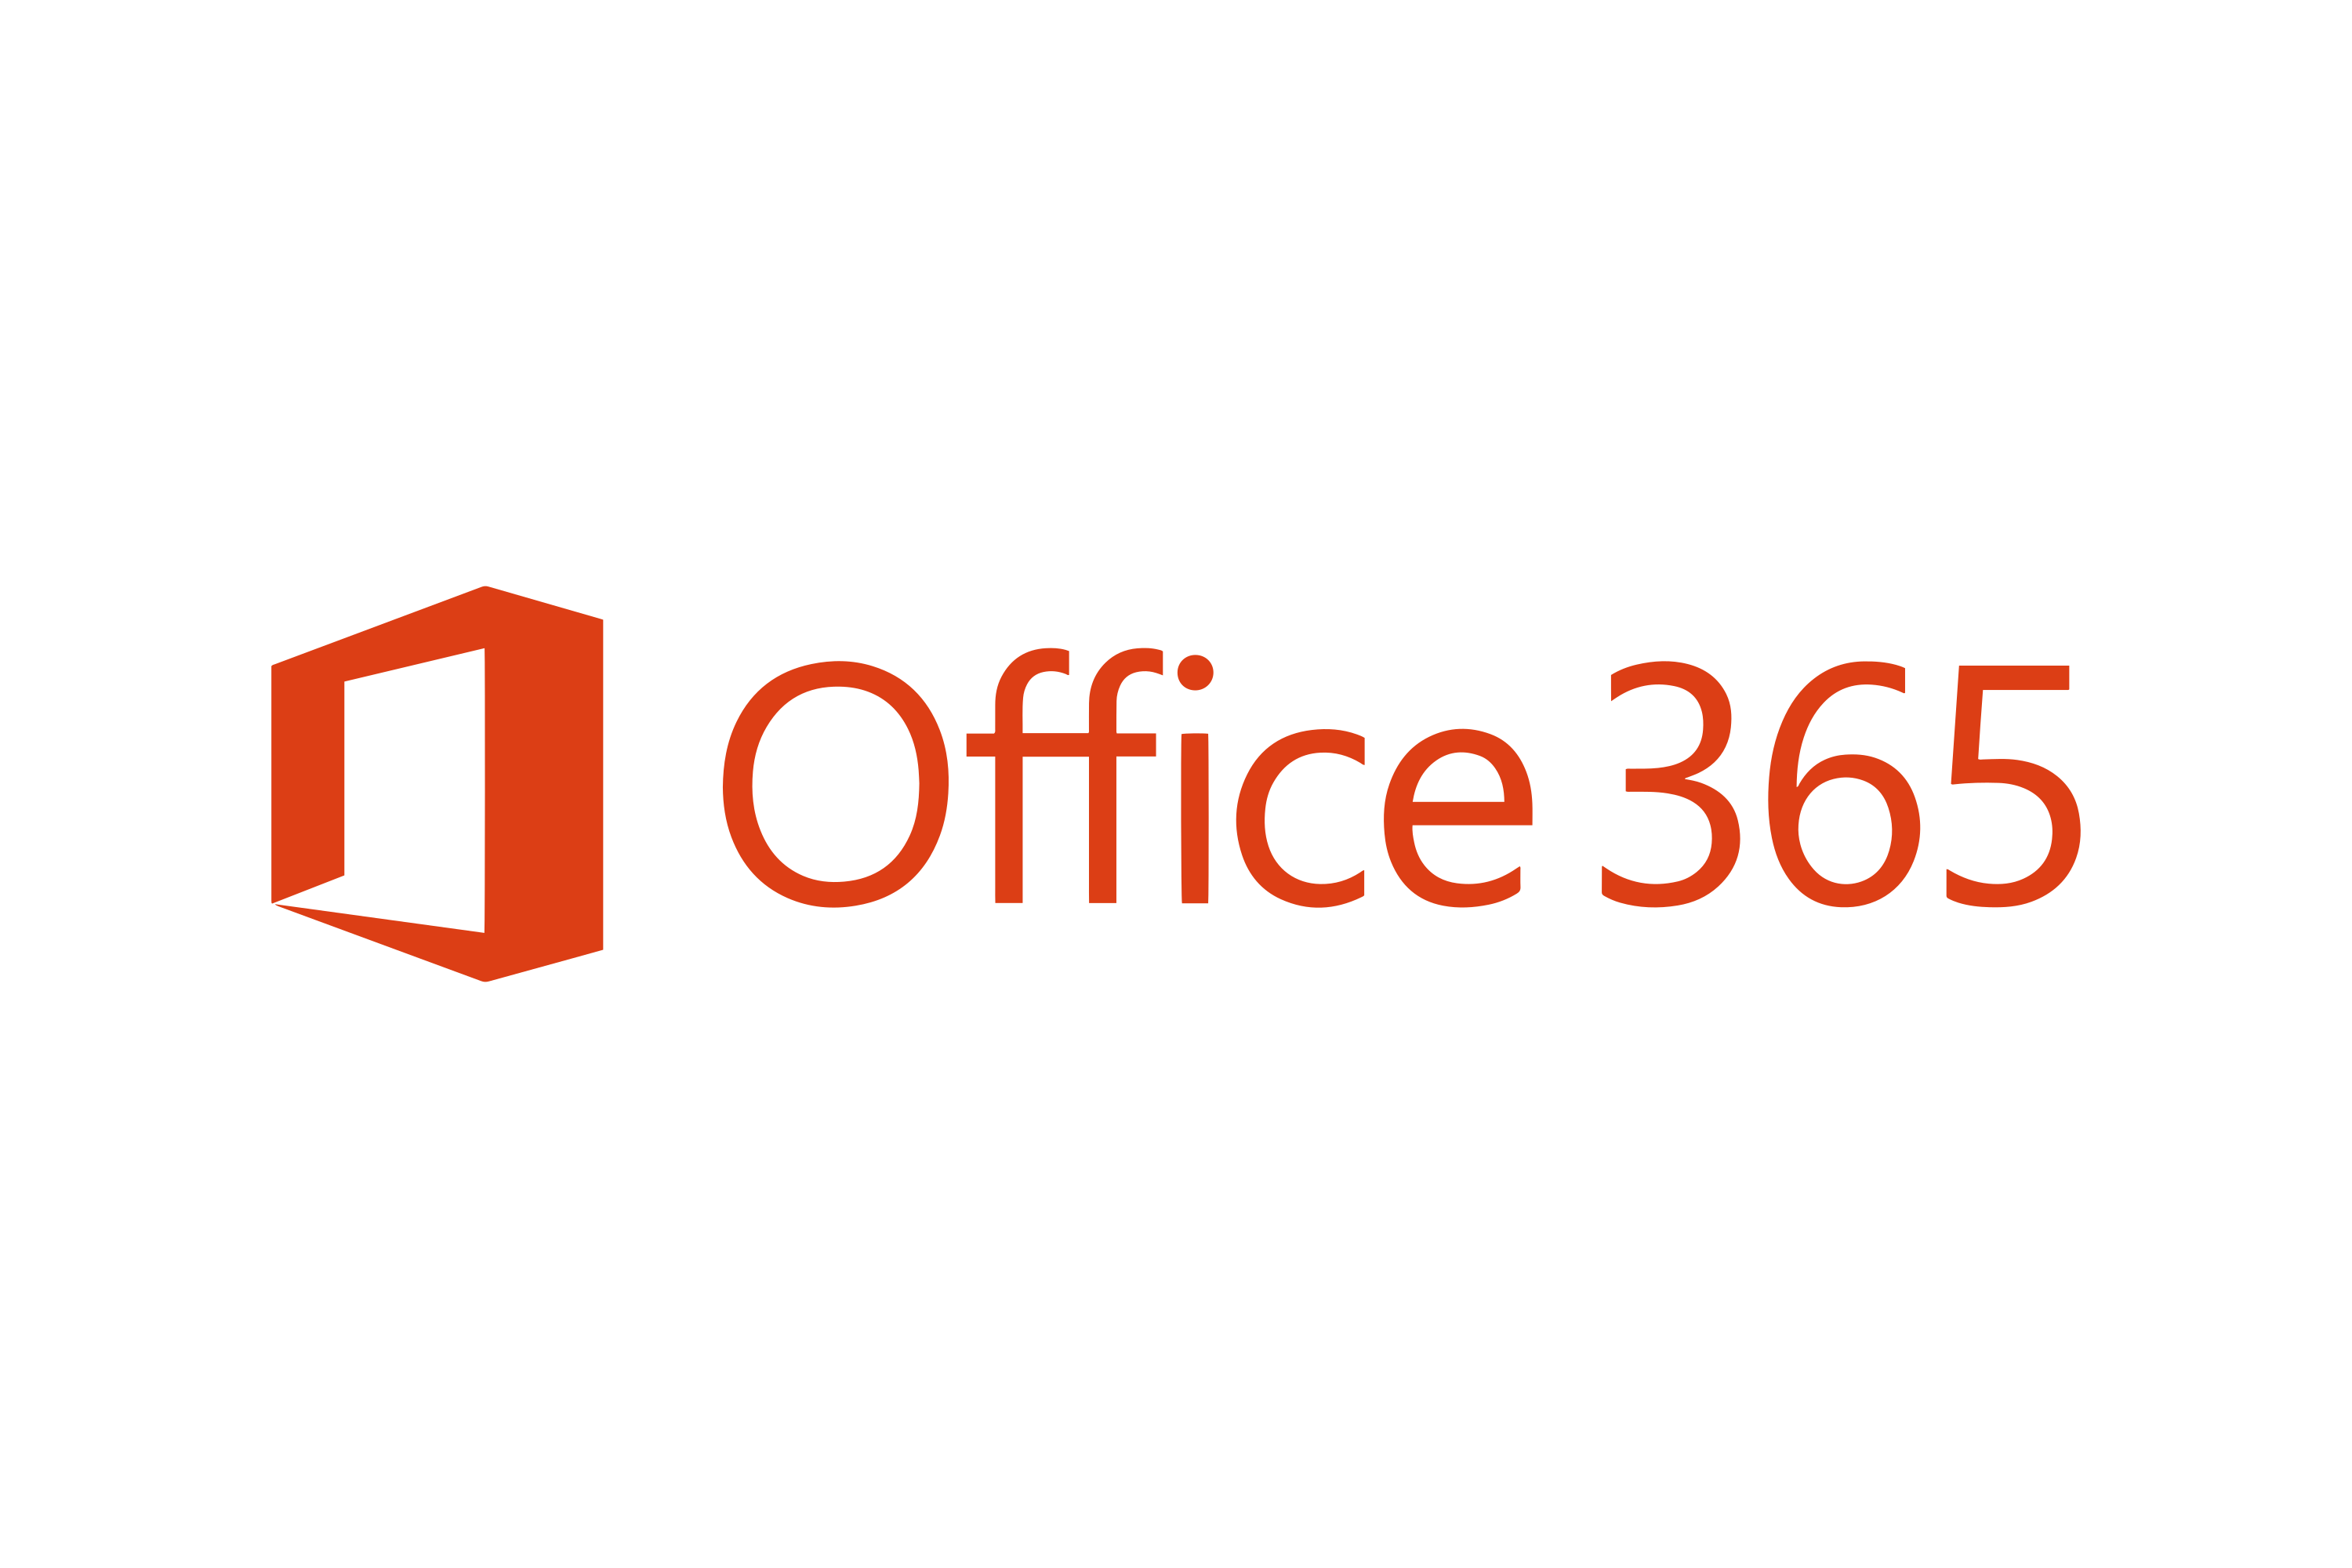 Office_365